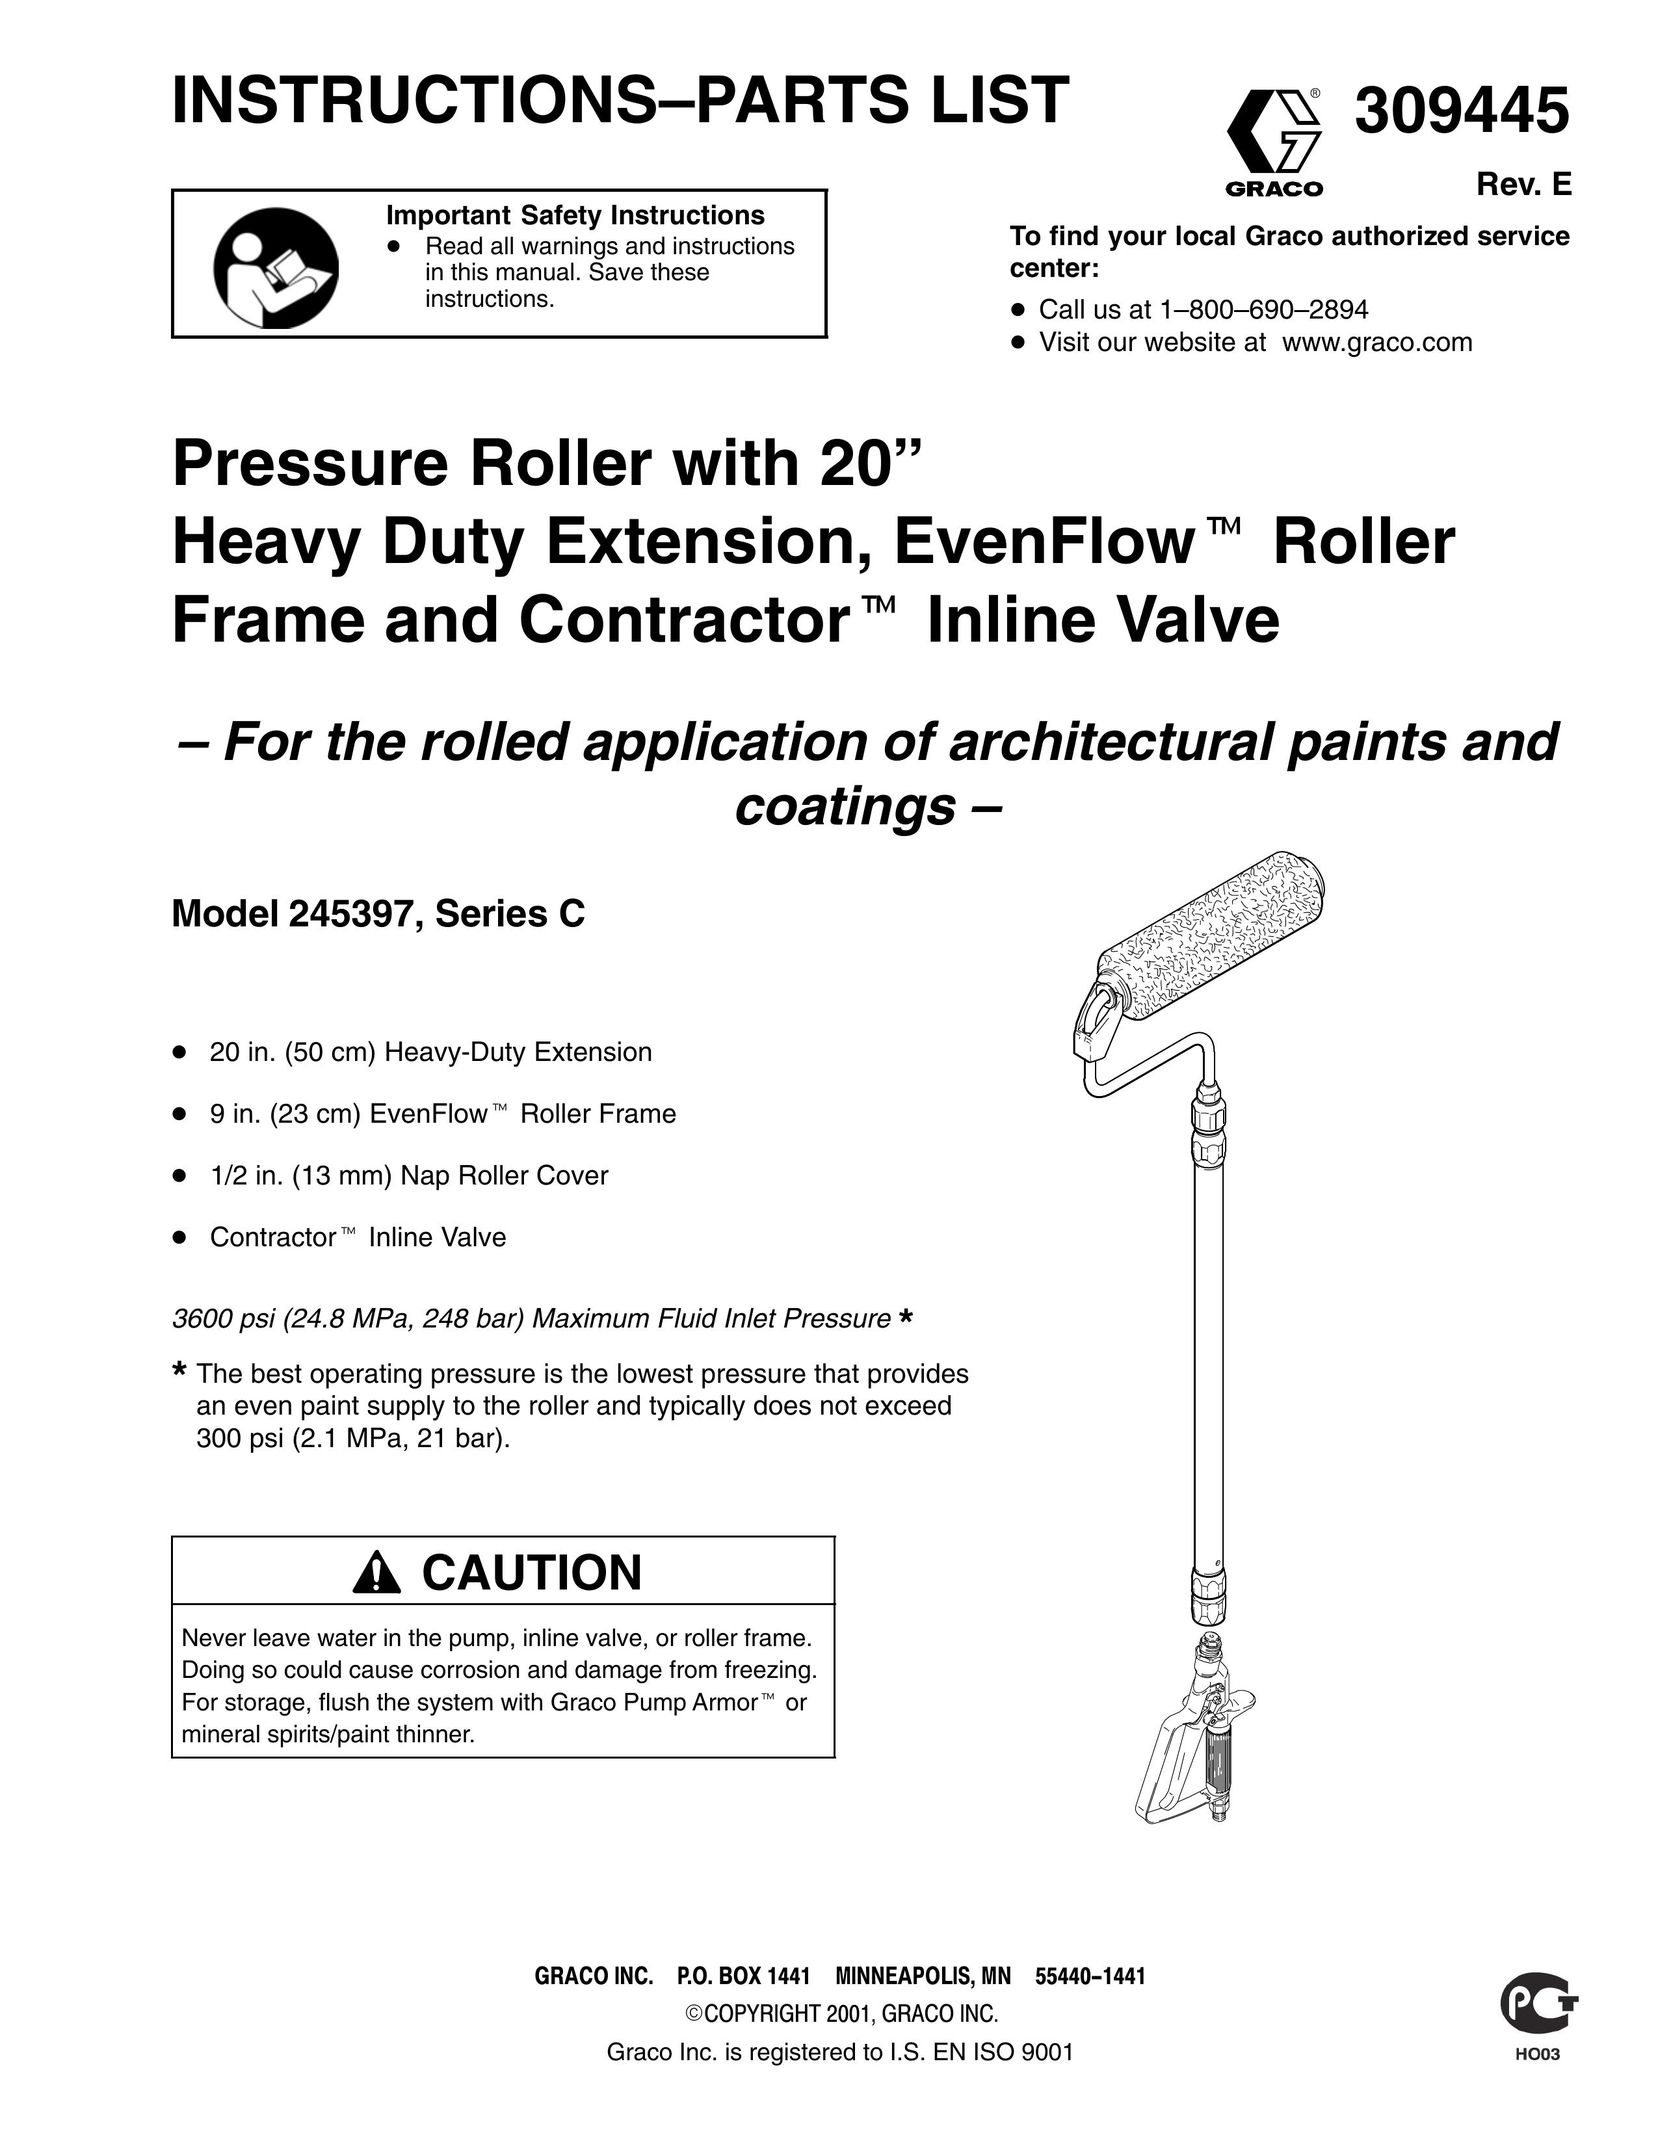 Graco Inc. 309445 Power Roller User Manual